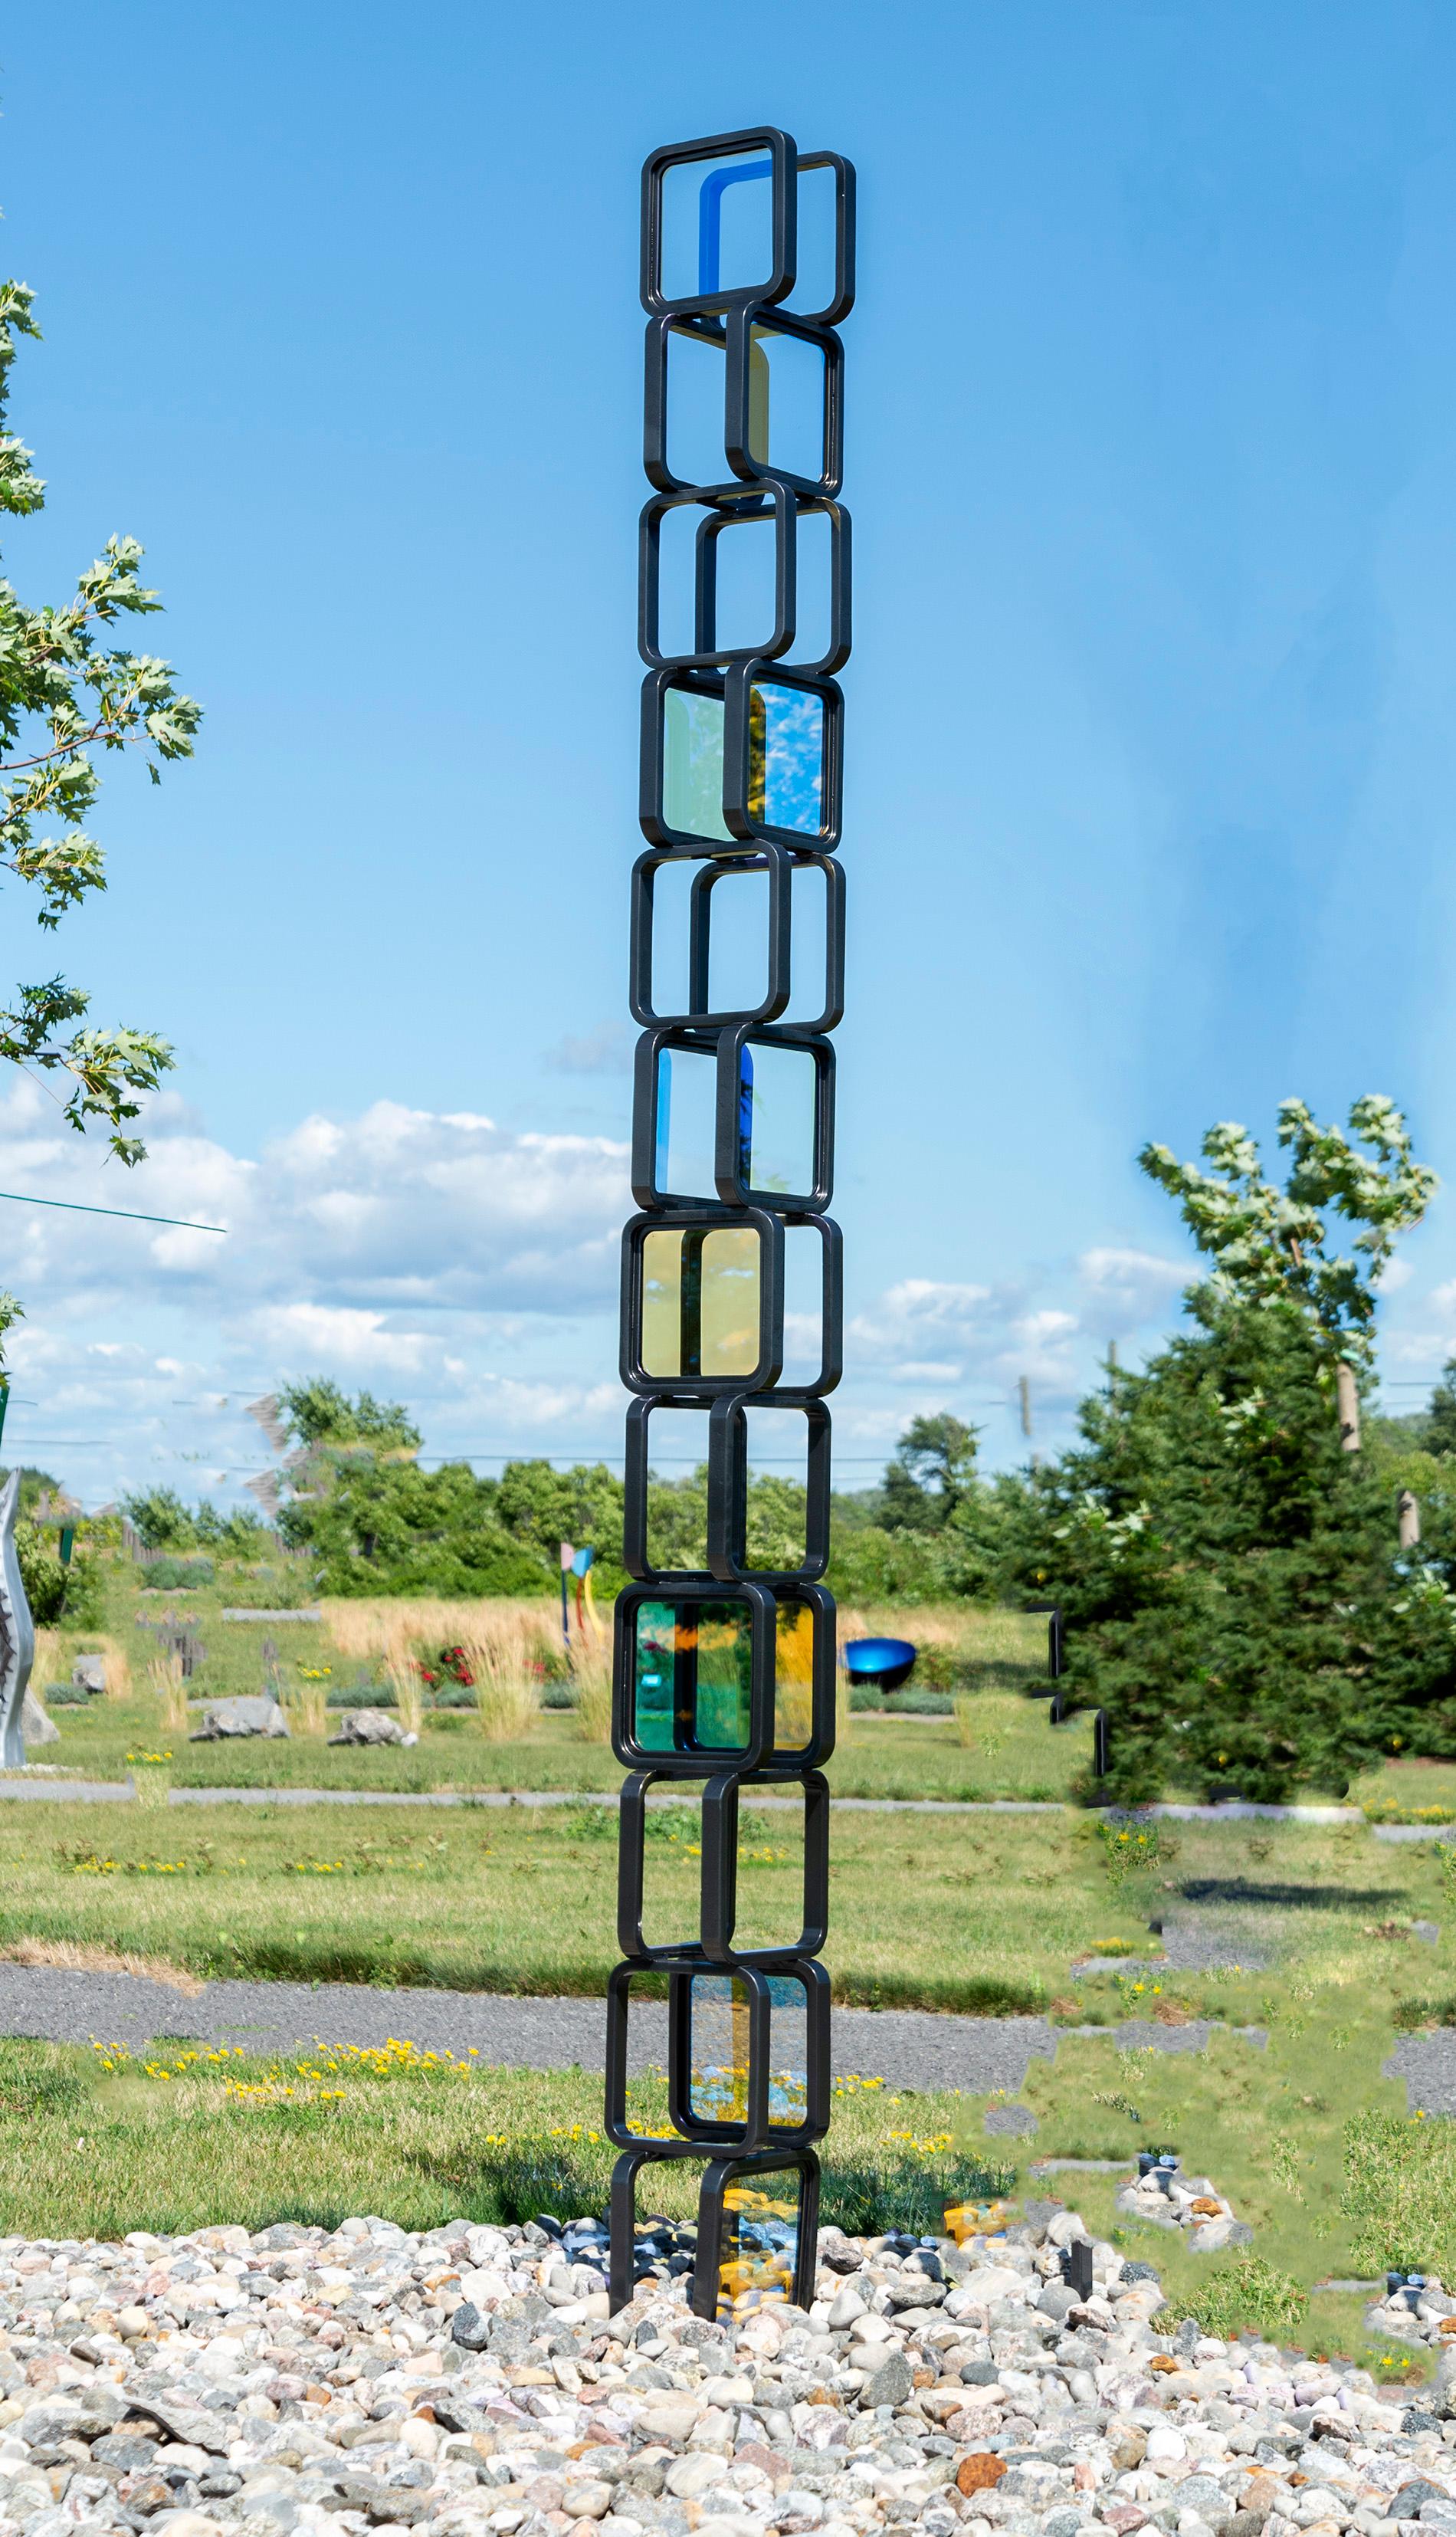 Chroma Tower No 2 - tall, geometric abstract, steel and glass sculpture - Abstract Geometric Sculpture by Ryan Van Der Hout